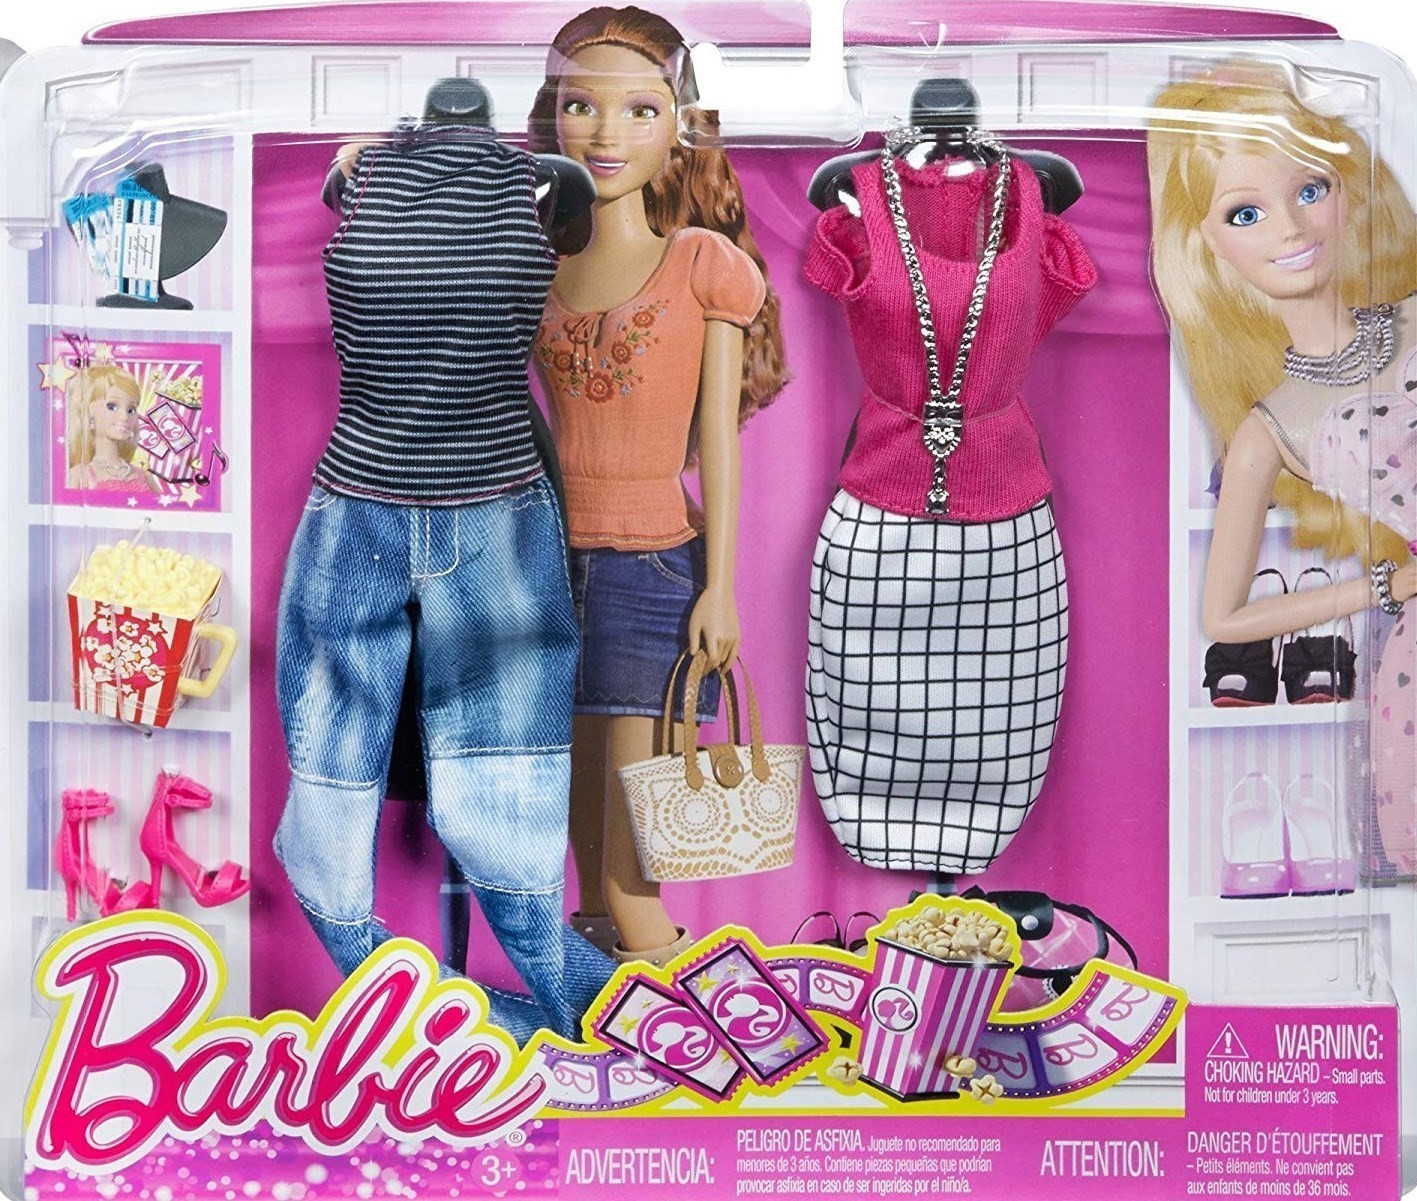 Barbie Series – Barbie Reference